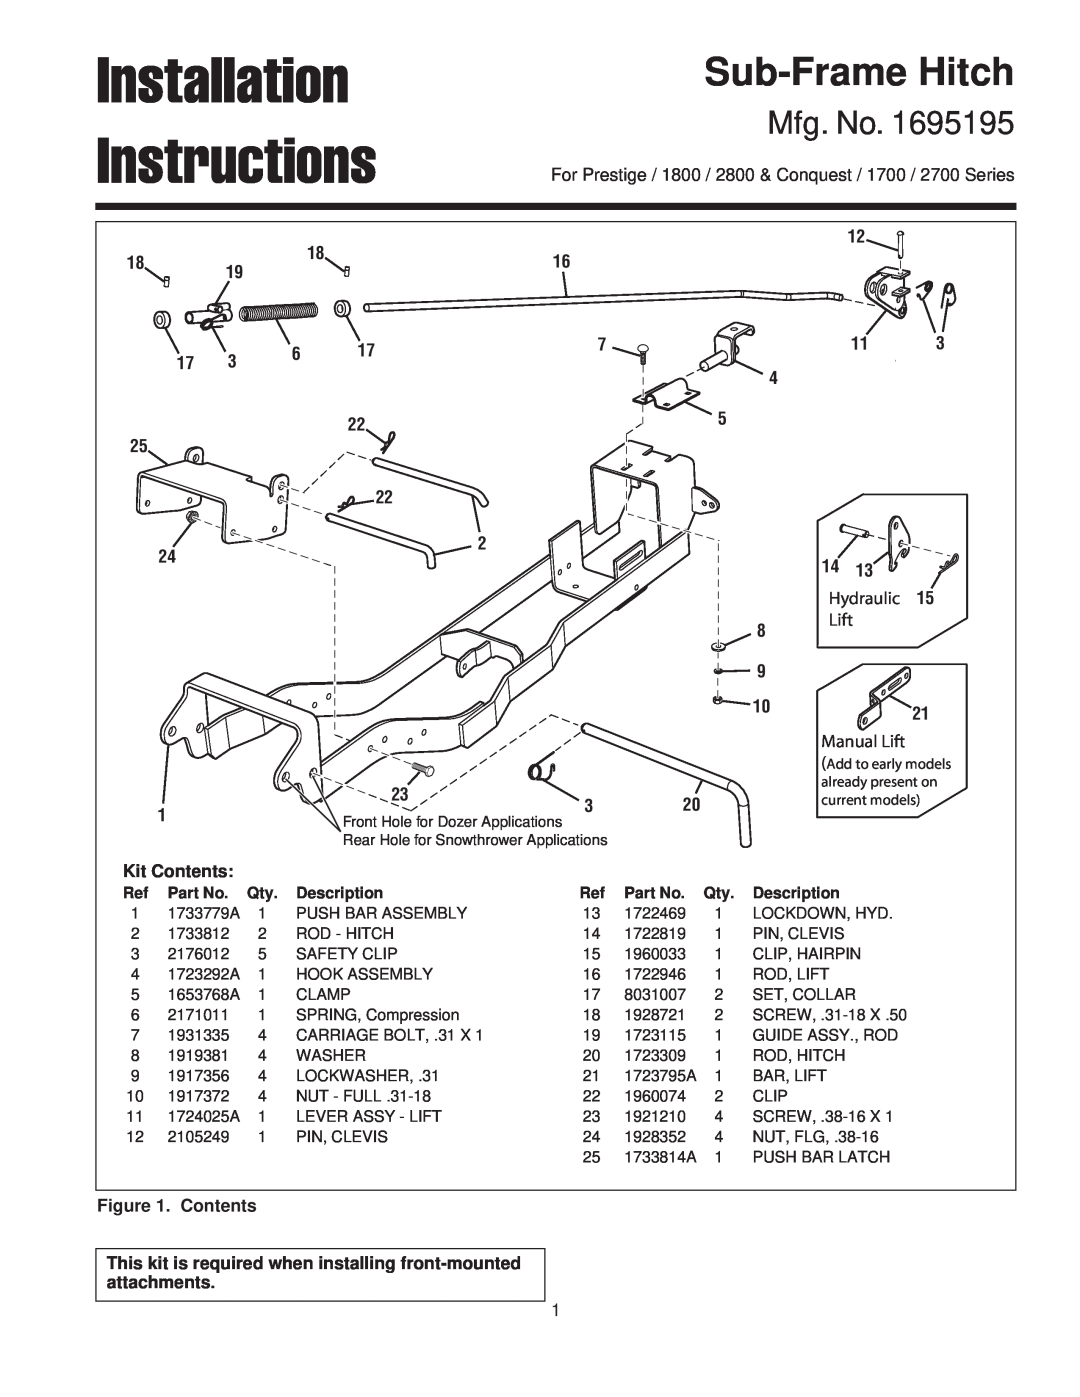 Snapper 1695195 installation instructions Installation Instructions, Sub-Frame Hitch, Mfg. No, Hydraulic 15 Lift 